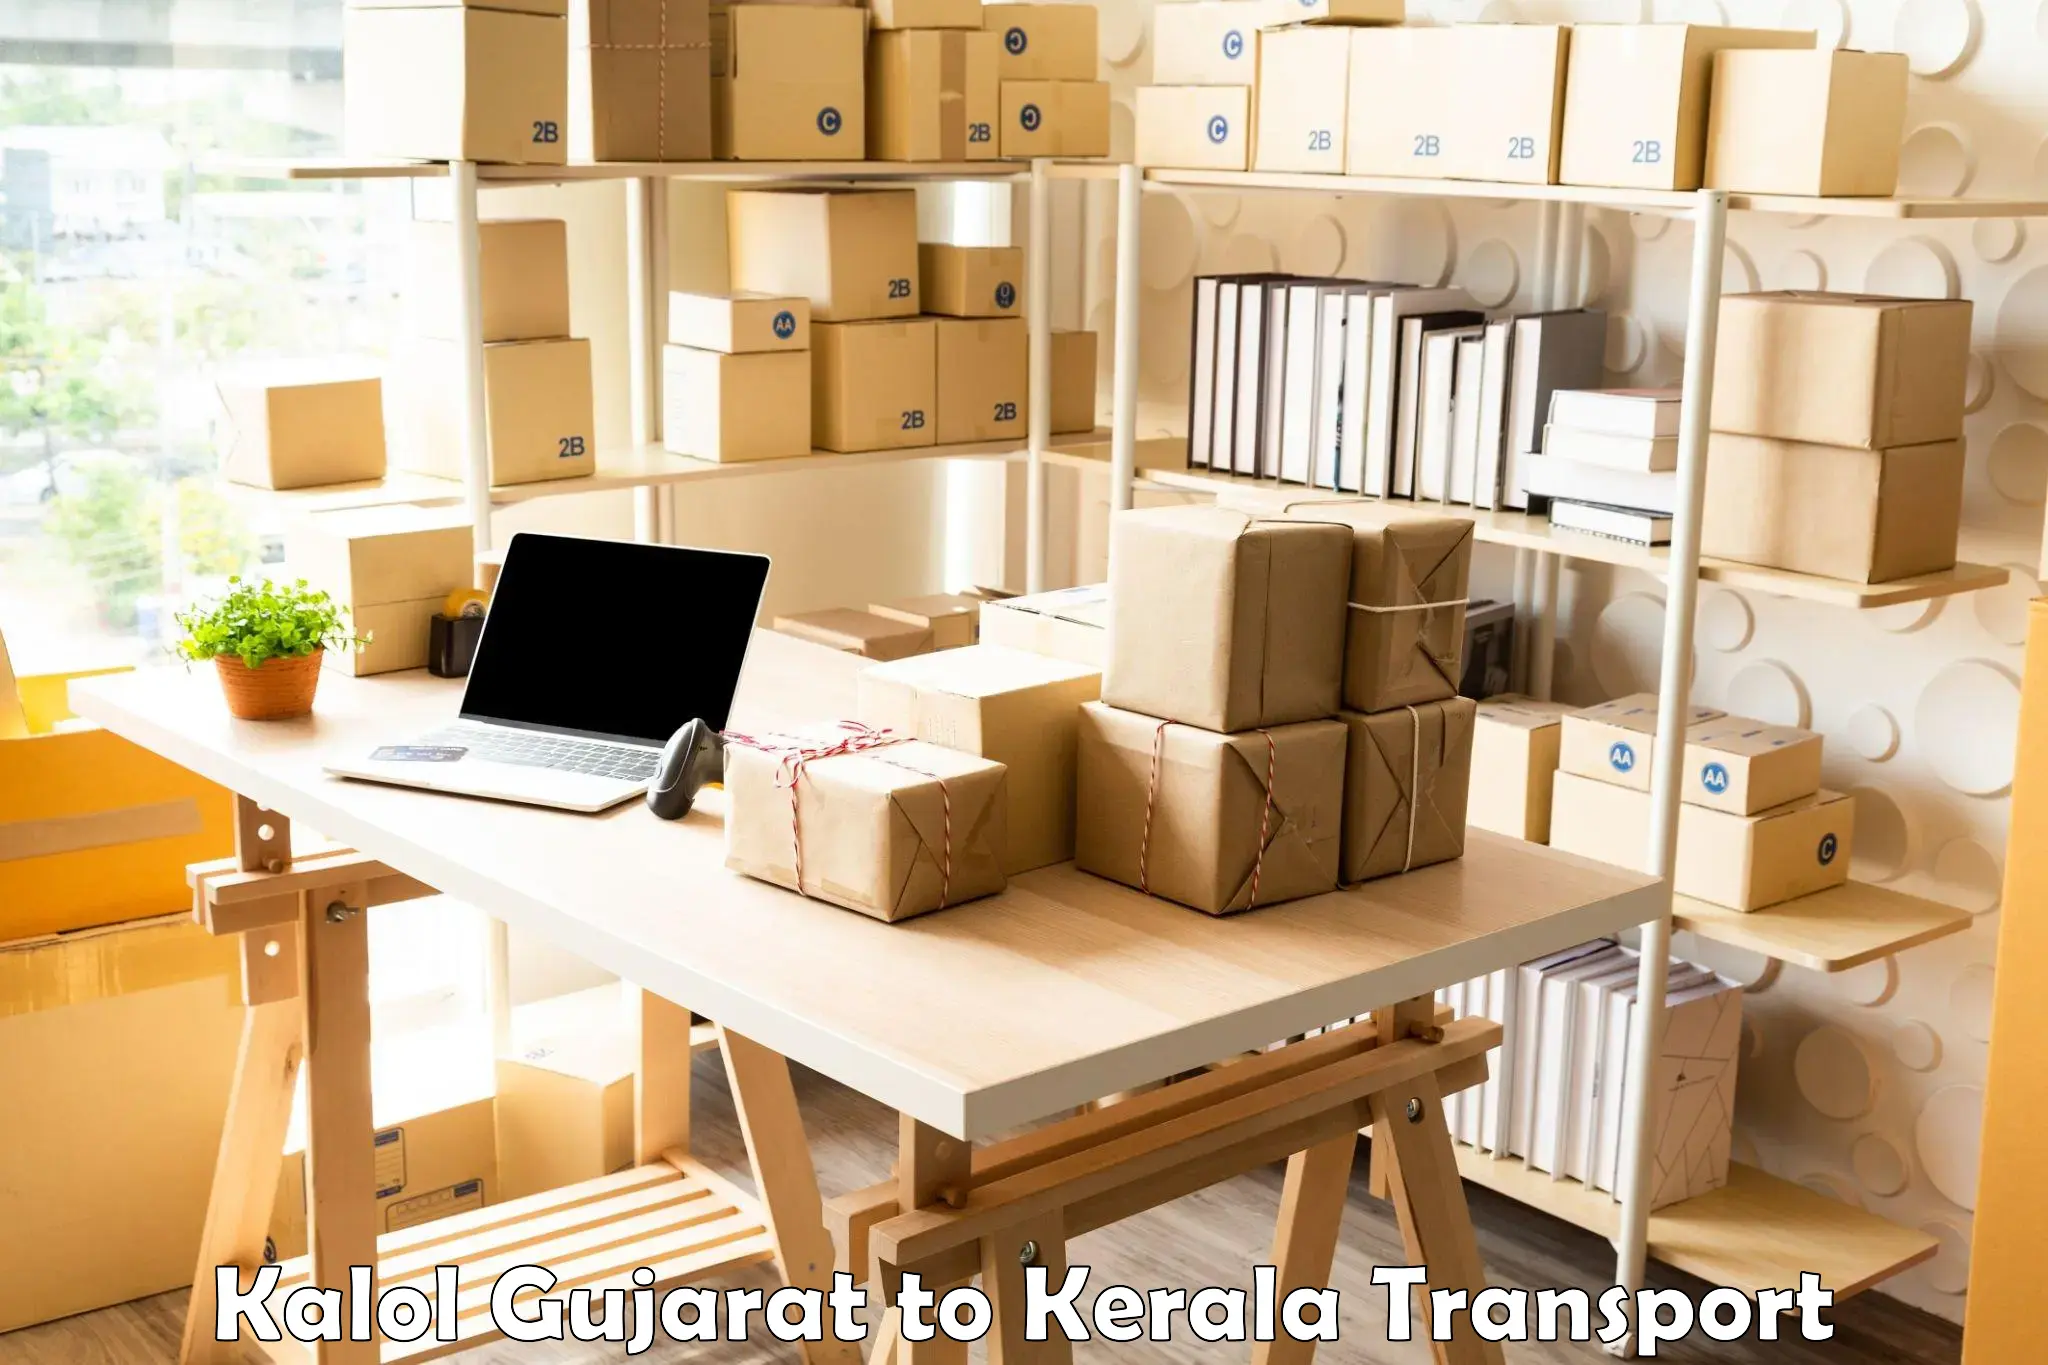 Parcel transport services Kalol Gujarat to Mahe